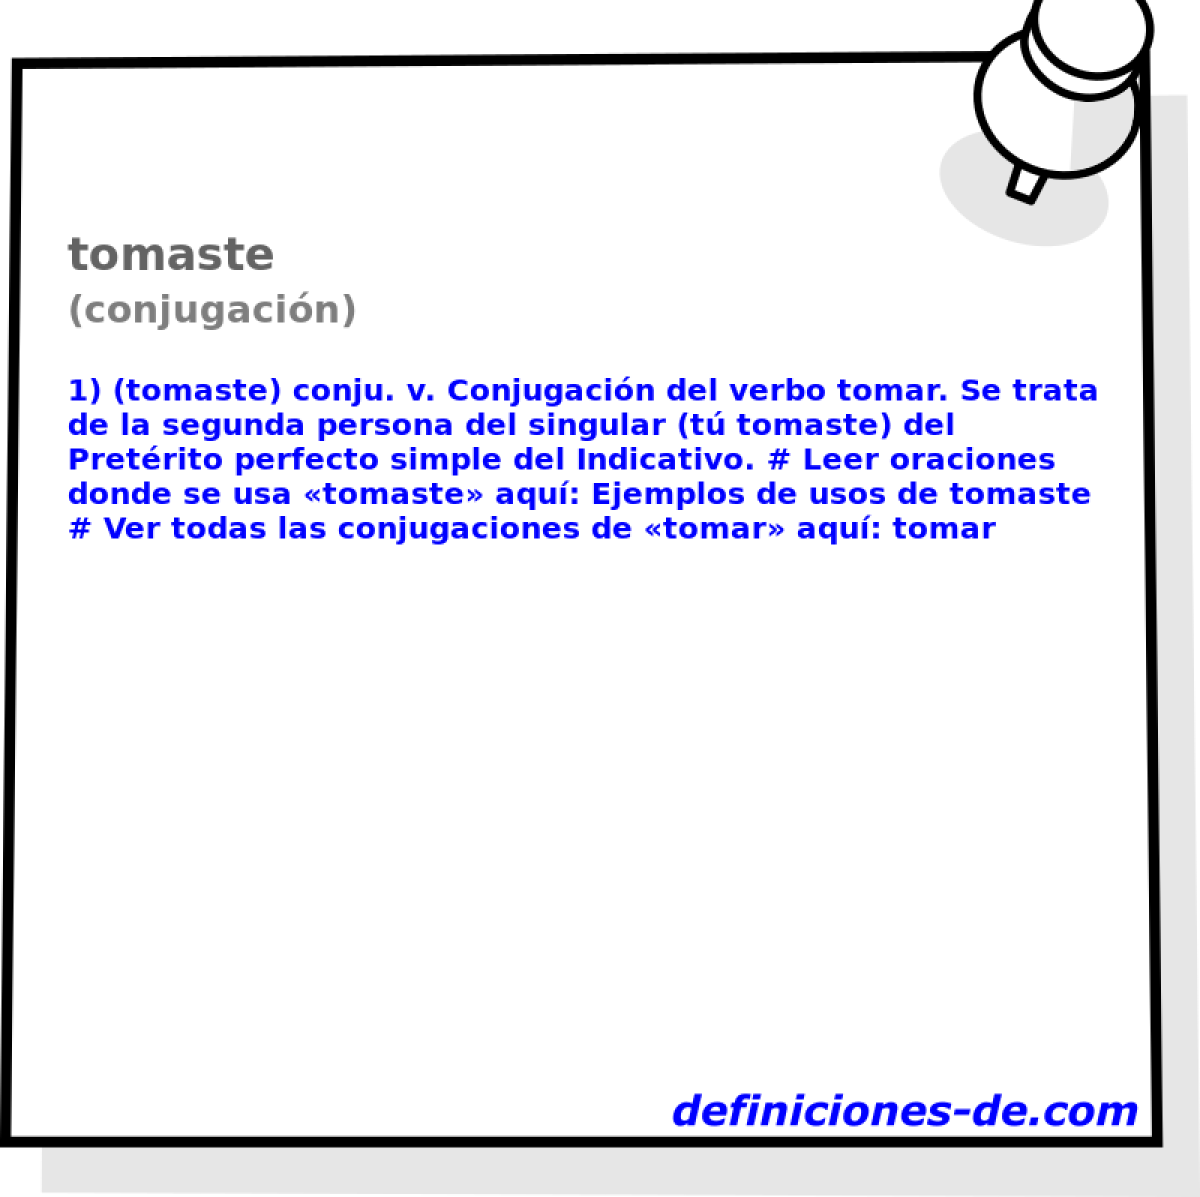 tomaste (conjugacin)